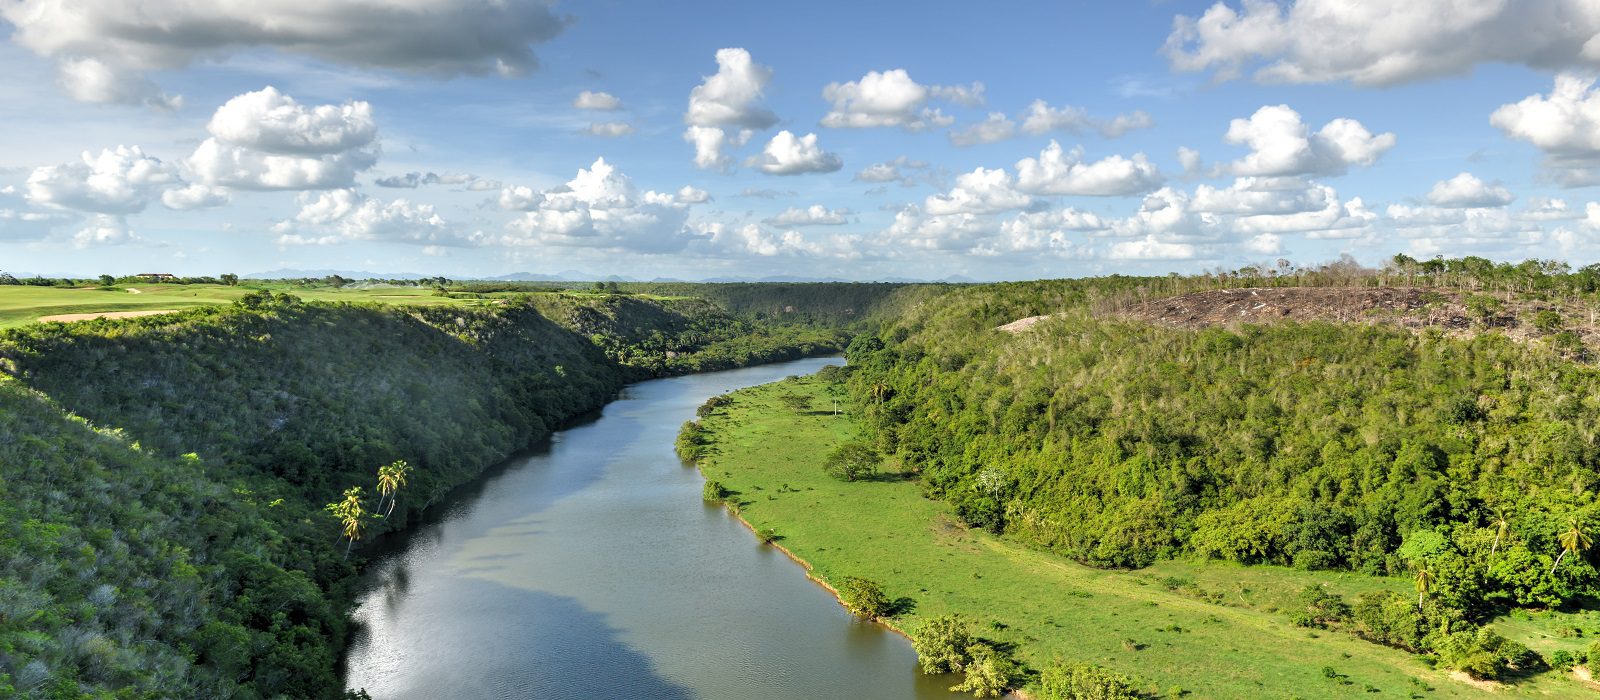 Tropical river Chavon in the Dominican Republic